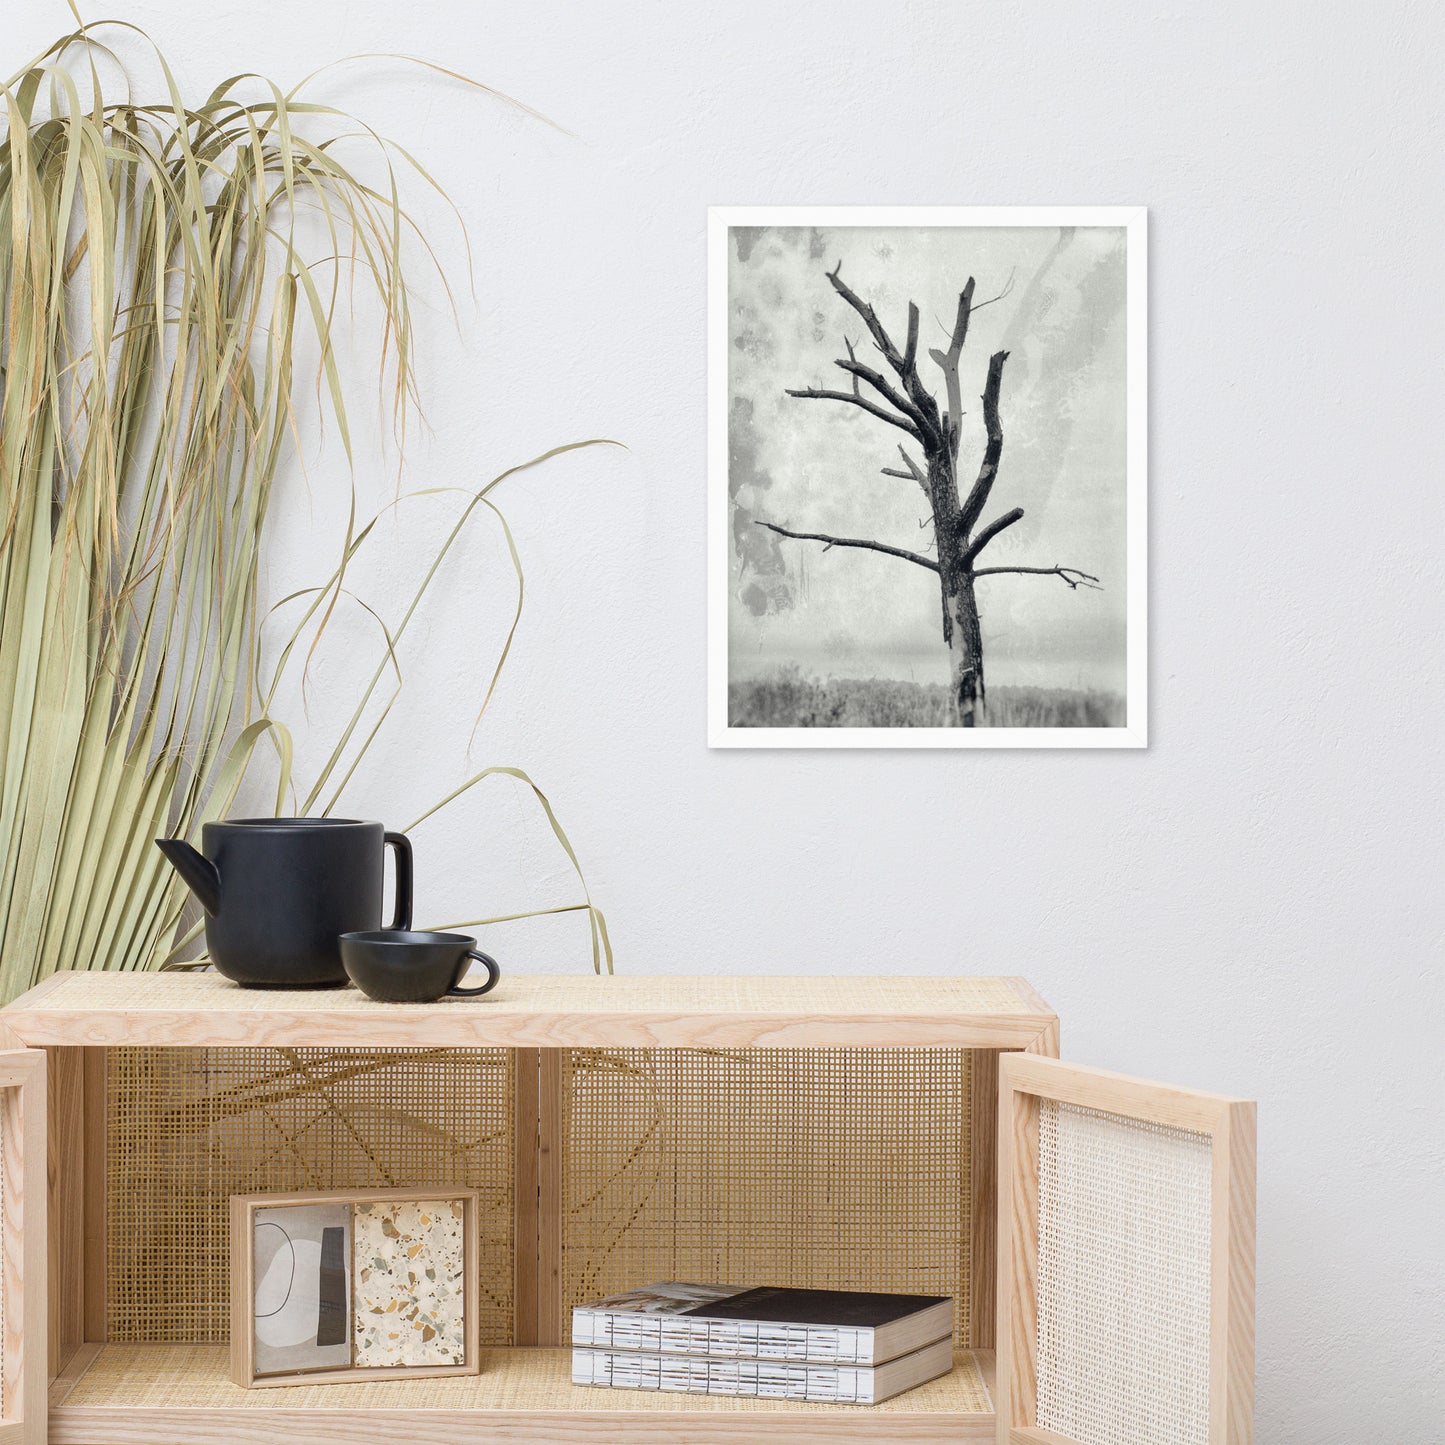 Rotting Away Alone Black and White Botanical Nature Photo Framed Wall Art Print